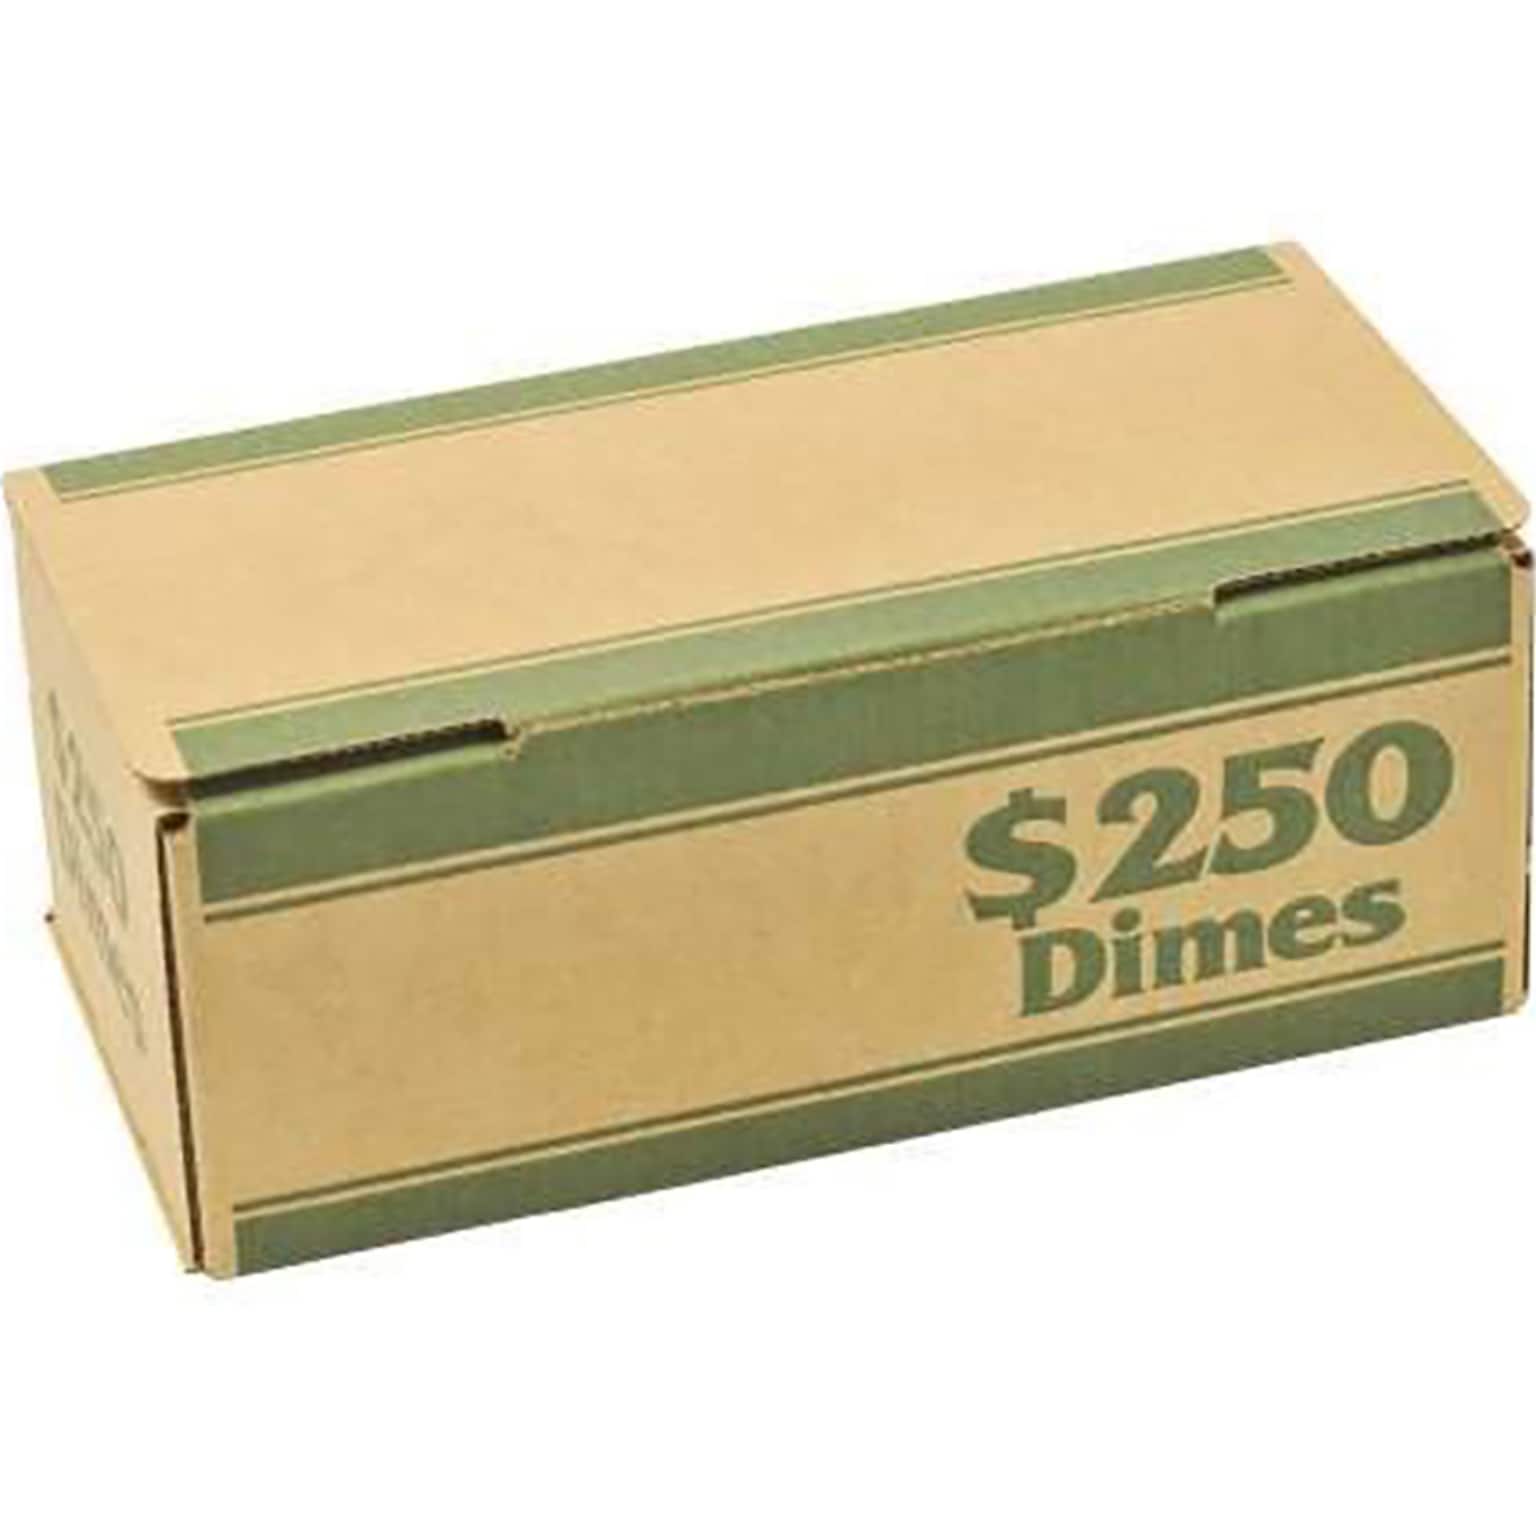 CONTROLTEK $250 Dimes Coin Box, 1-Compartment, Kraft/Green, 50/Pack (560061)